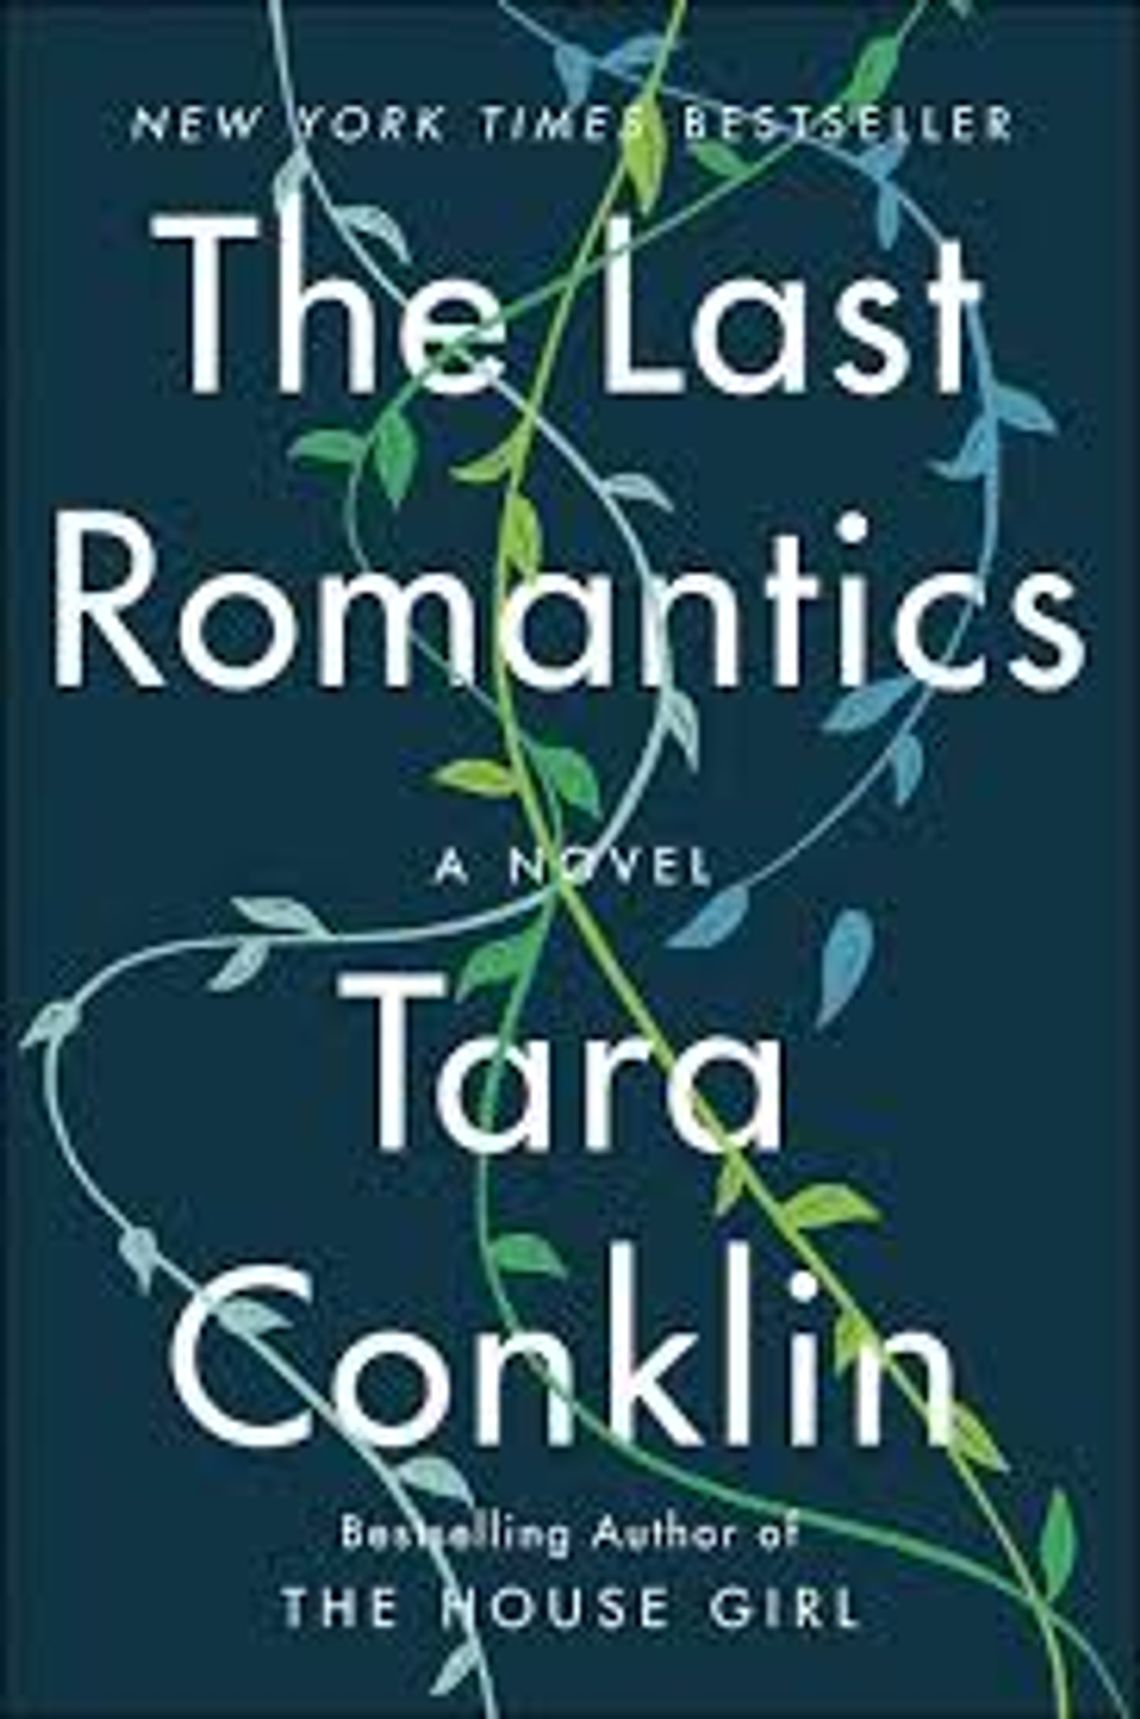 Book Review -- The Last Romantics